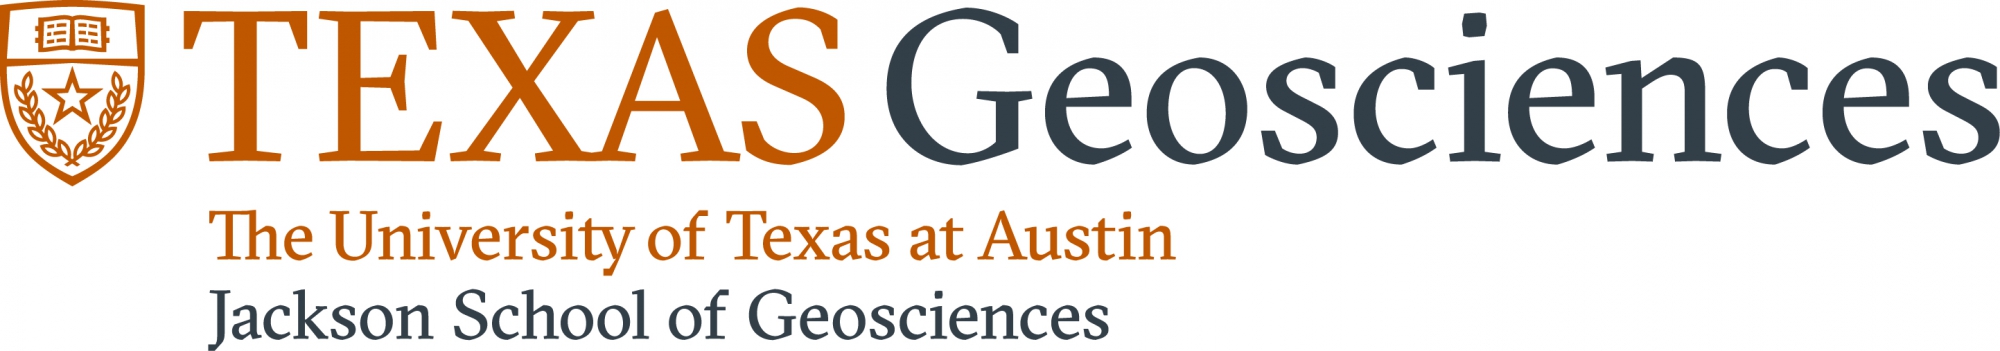 Texas Geosciences